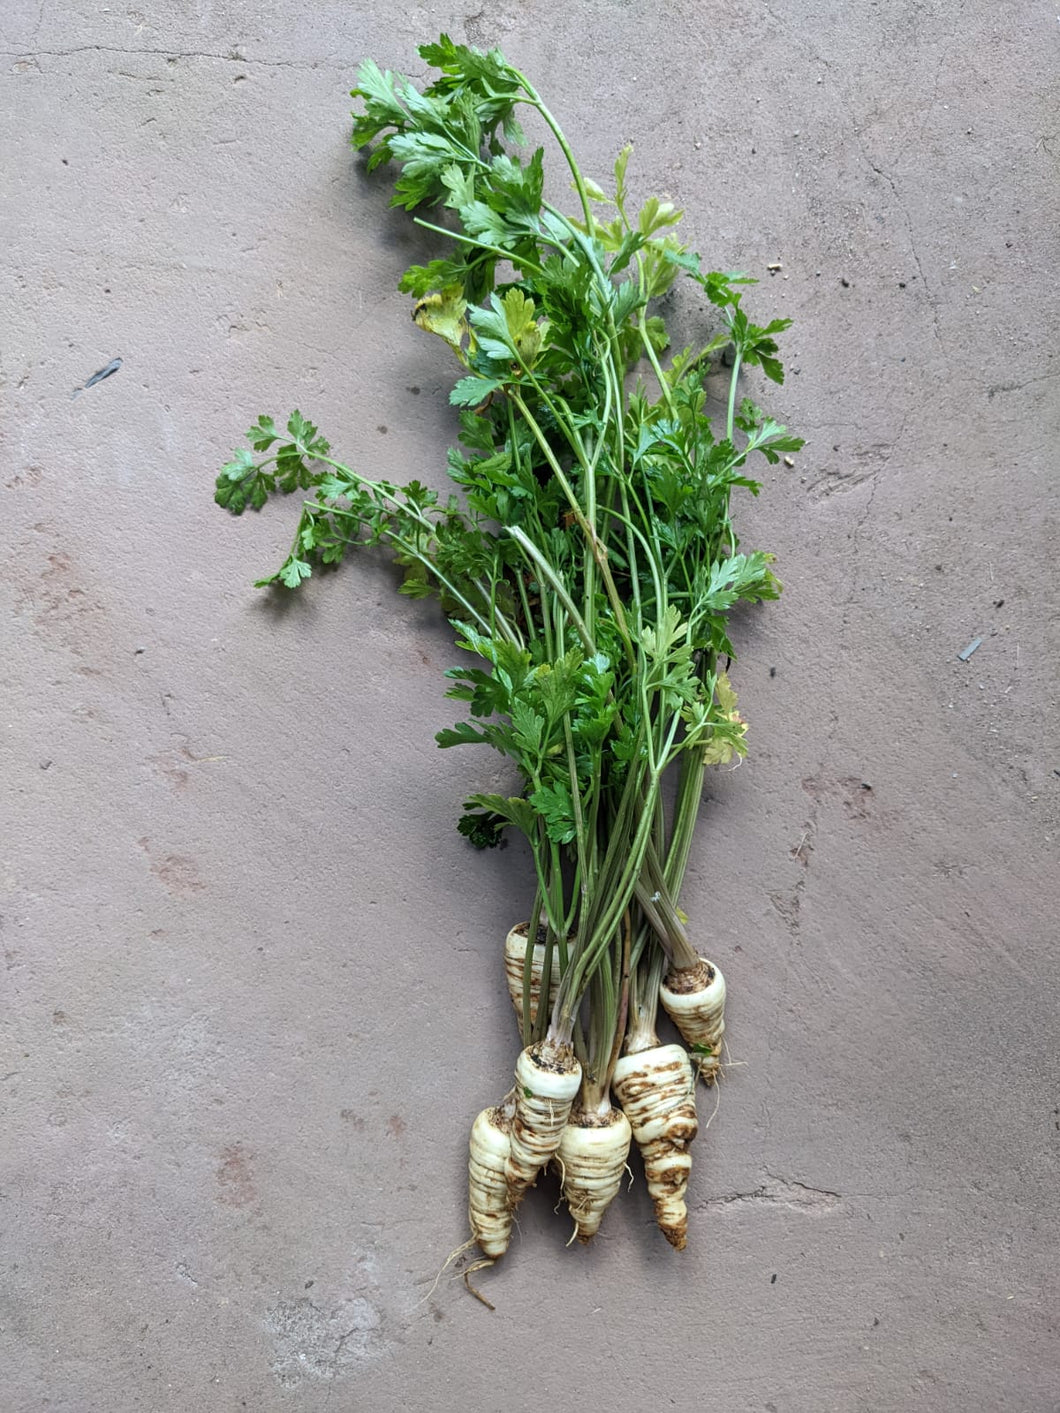 Add on - Arat parsley root 500g